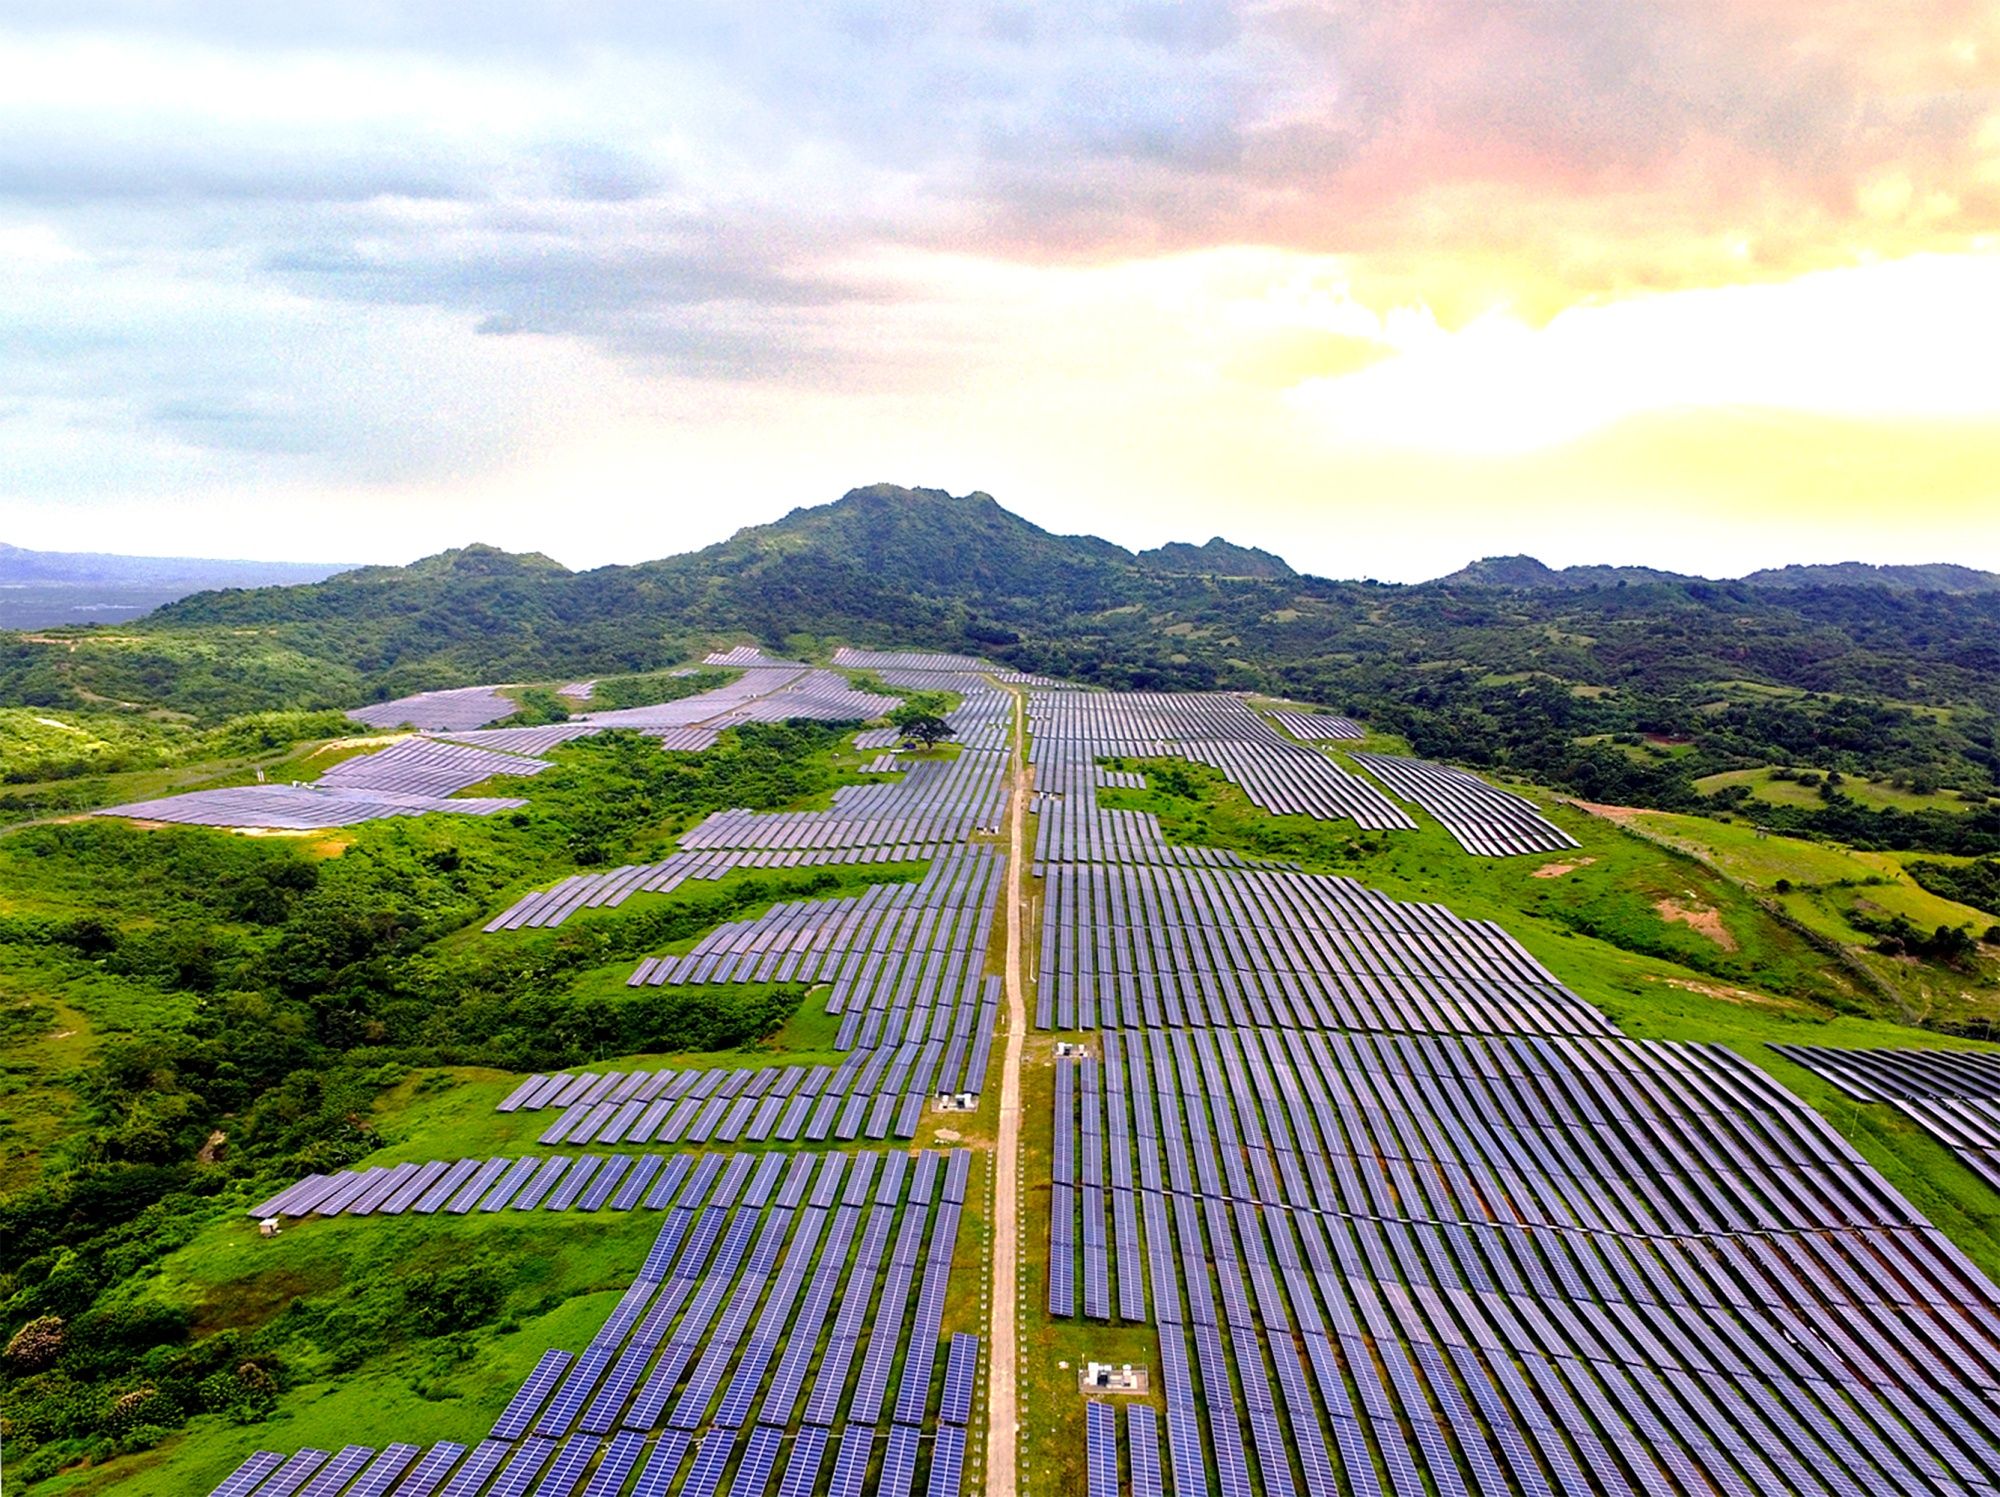 P5B solar farm up for construction in Calatagan